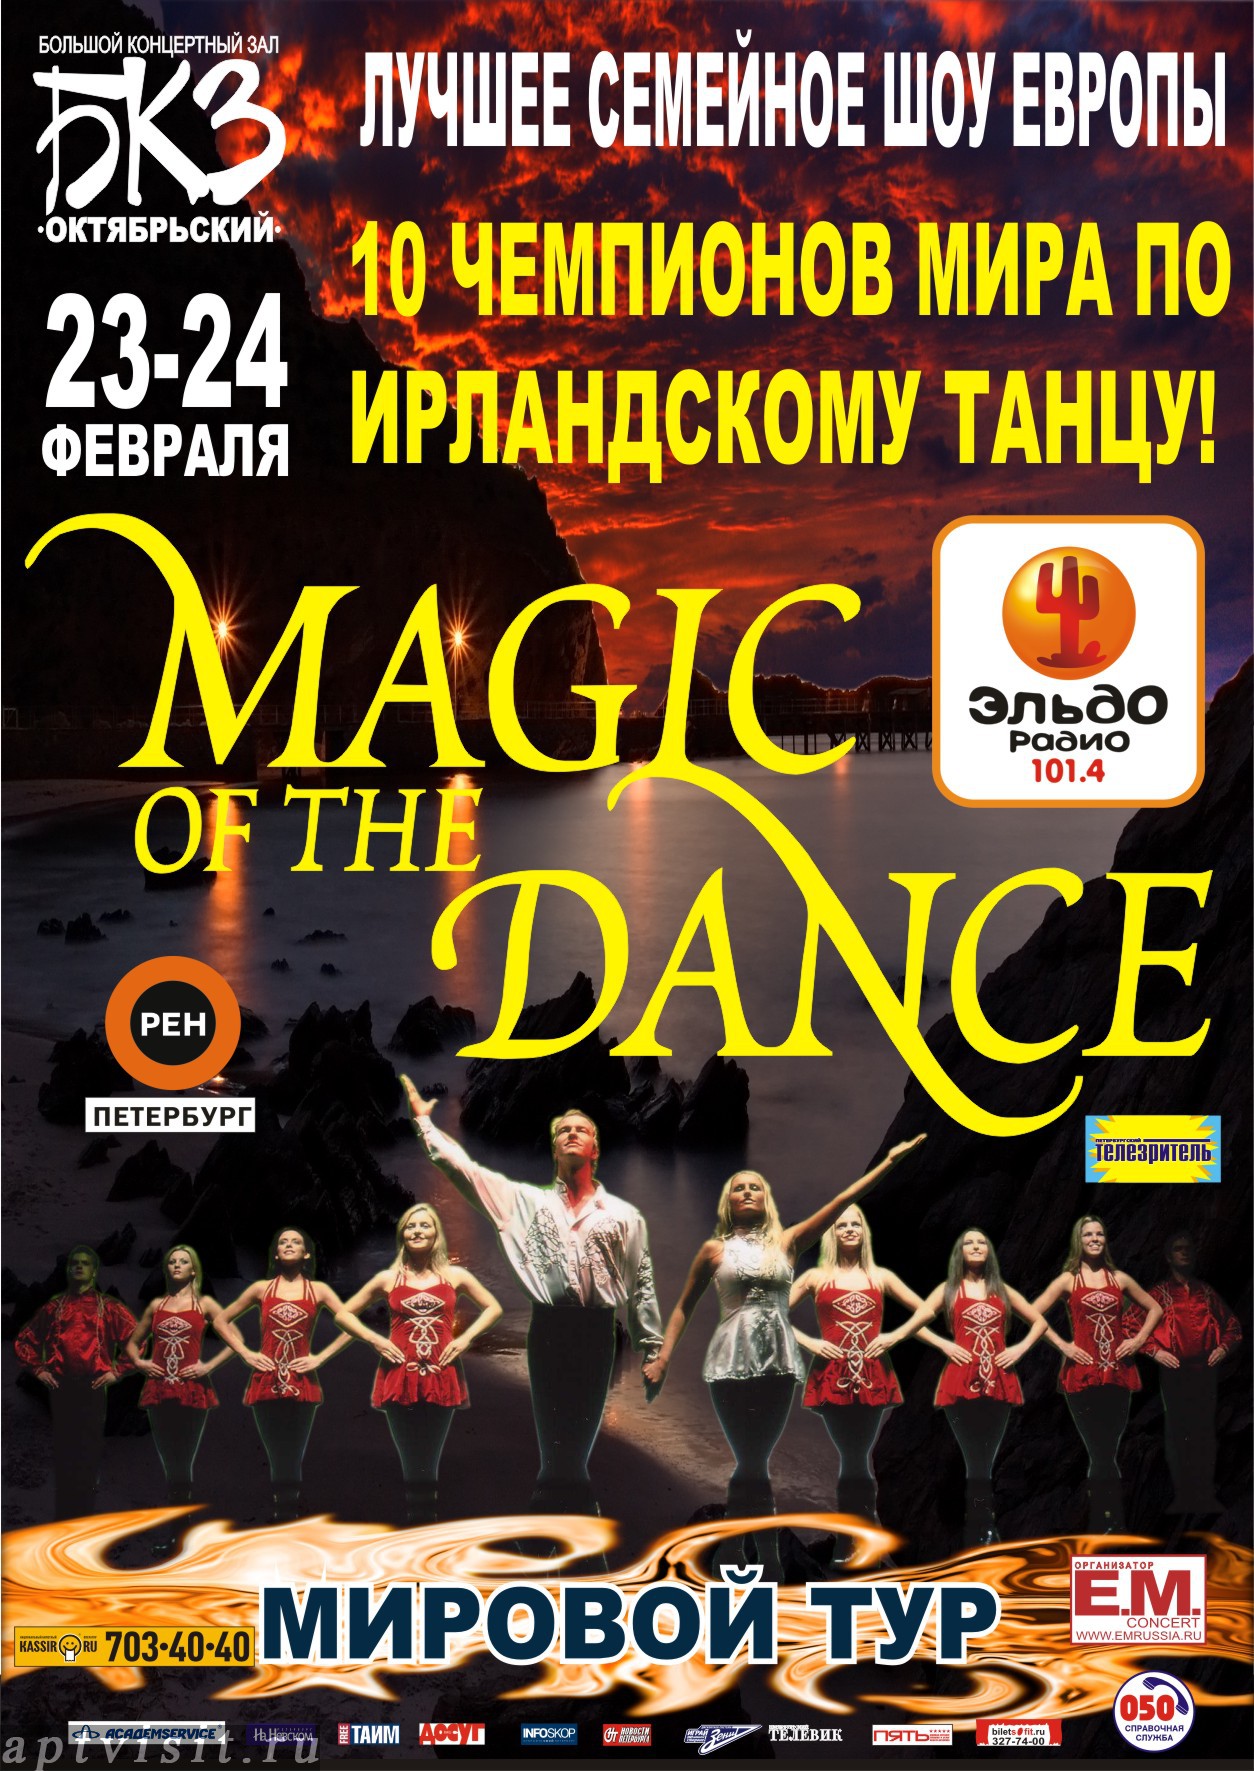 Magic of the dance